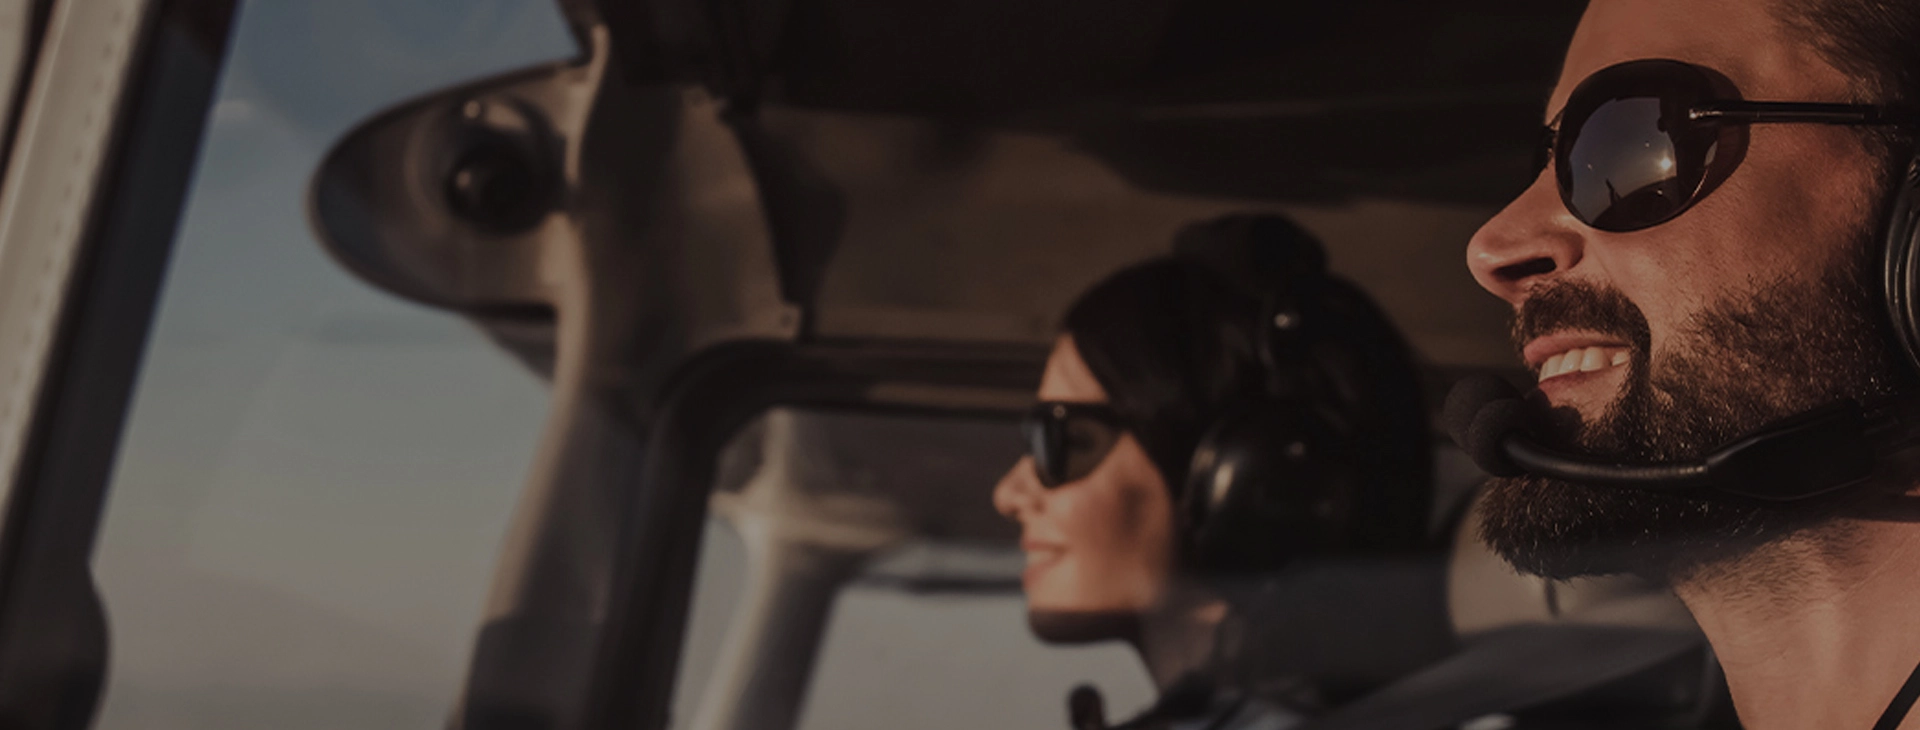 Pilot Communications Headset